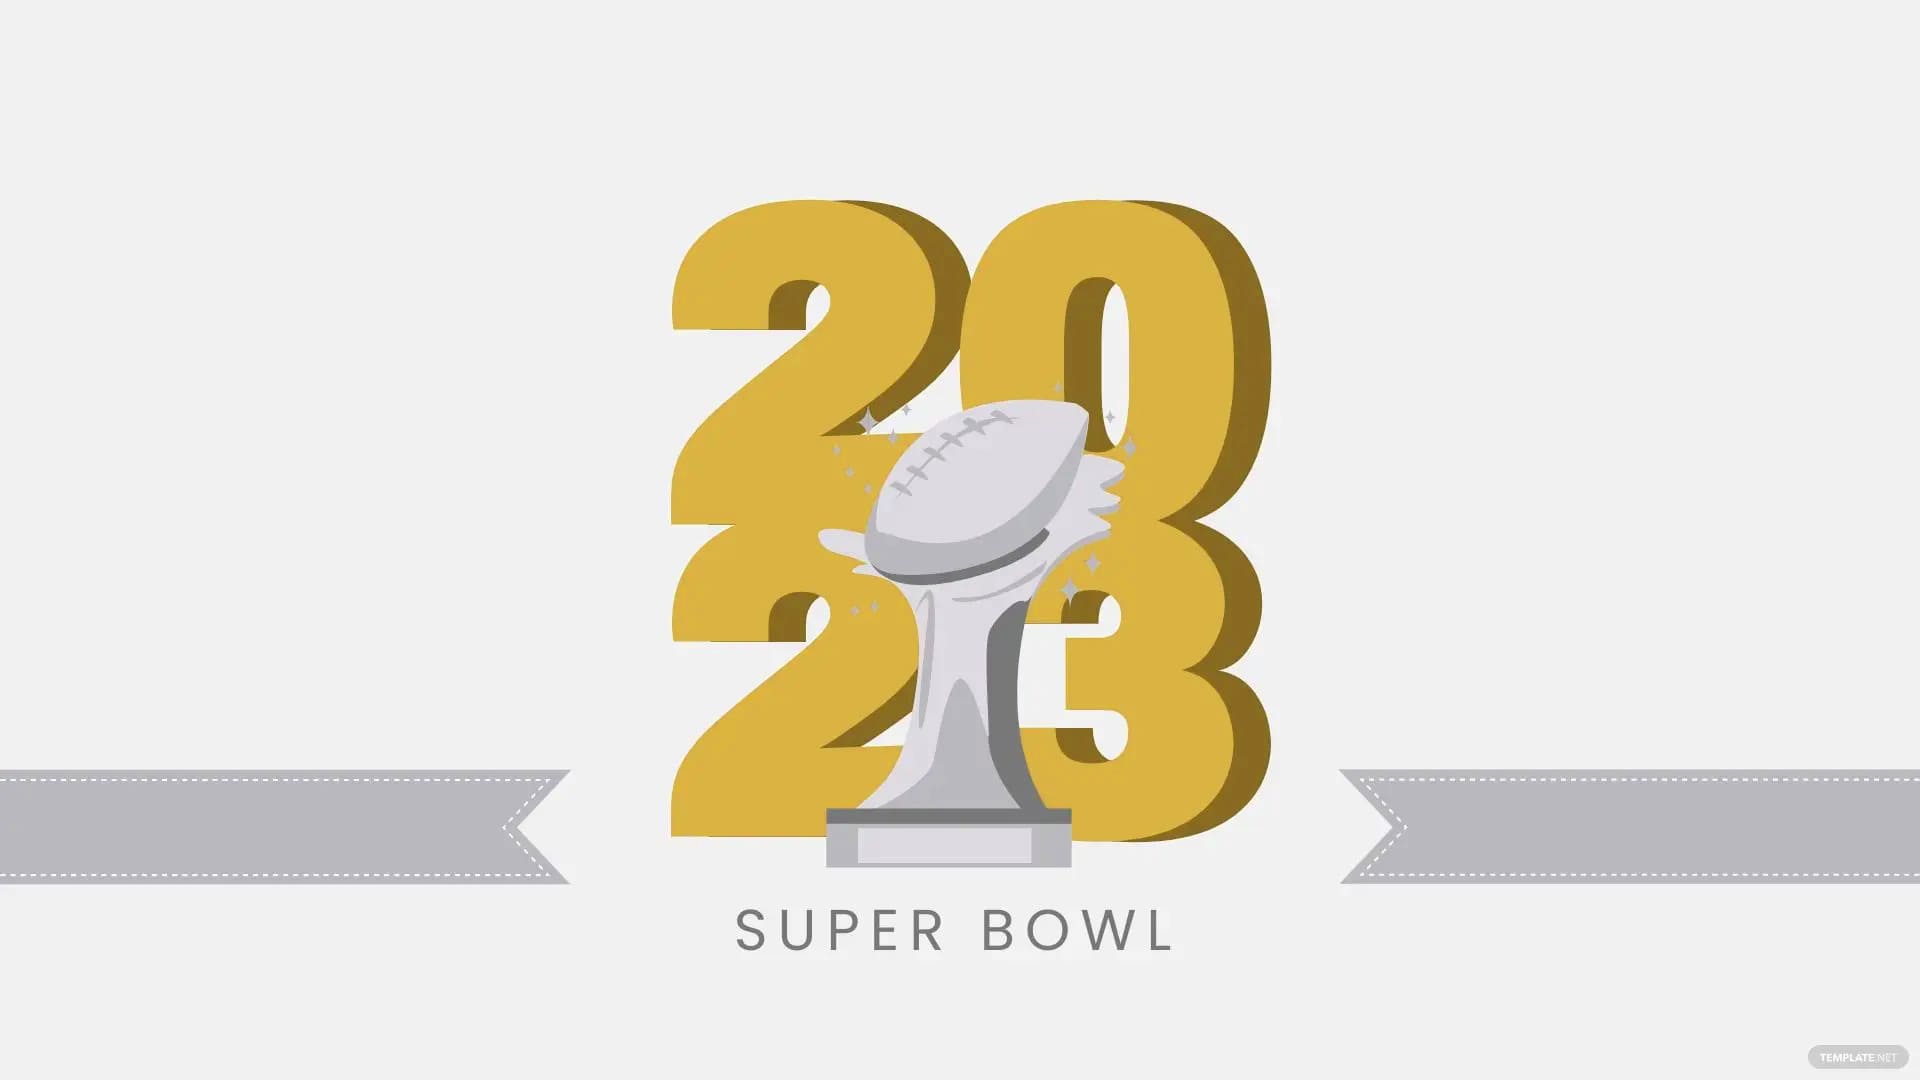 Super Bowl 2023 Wallpapers